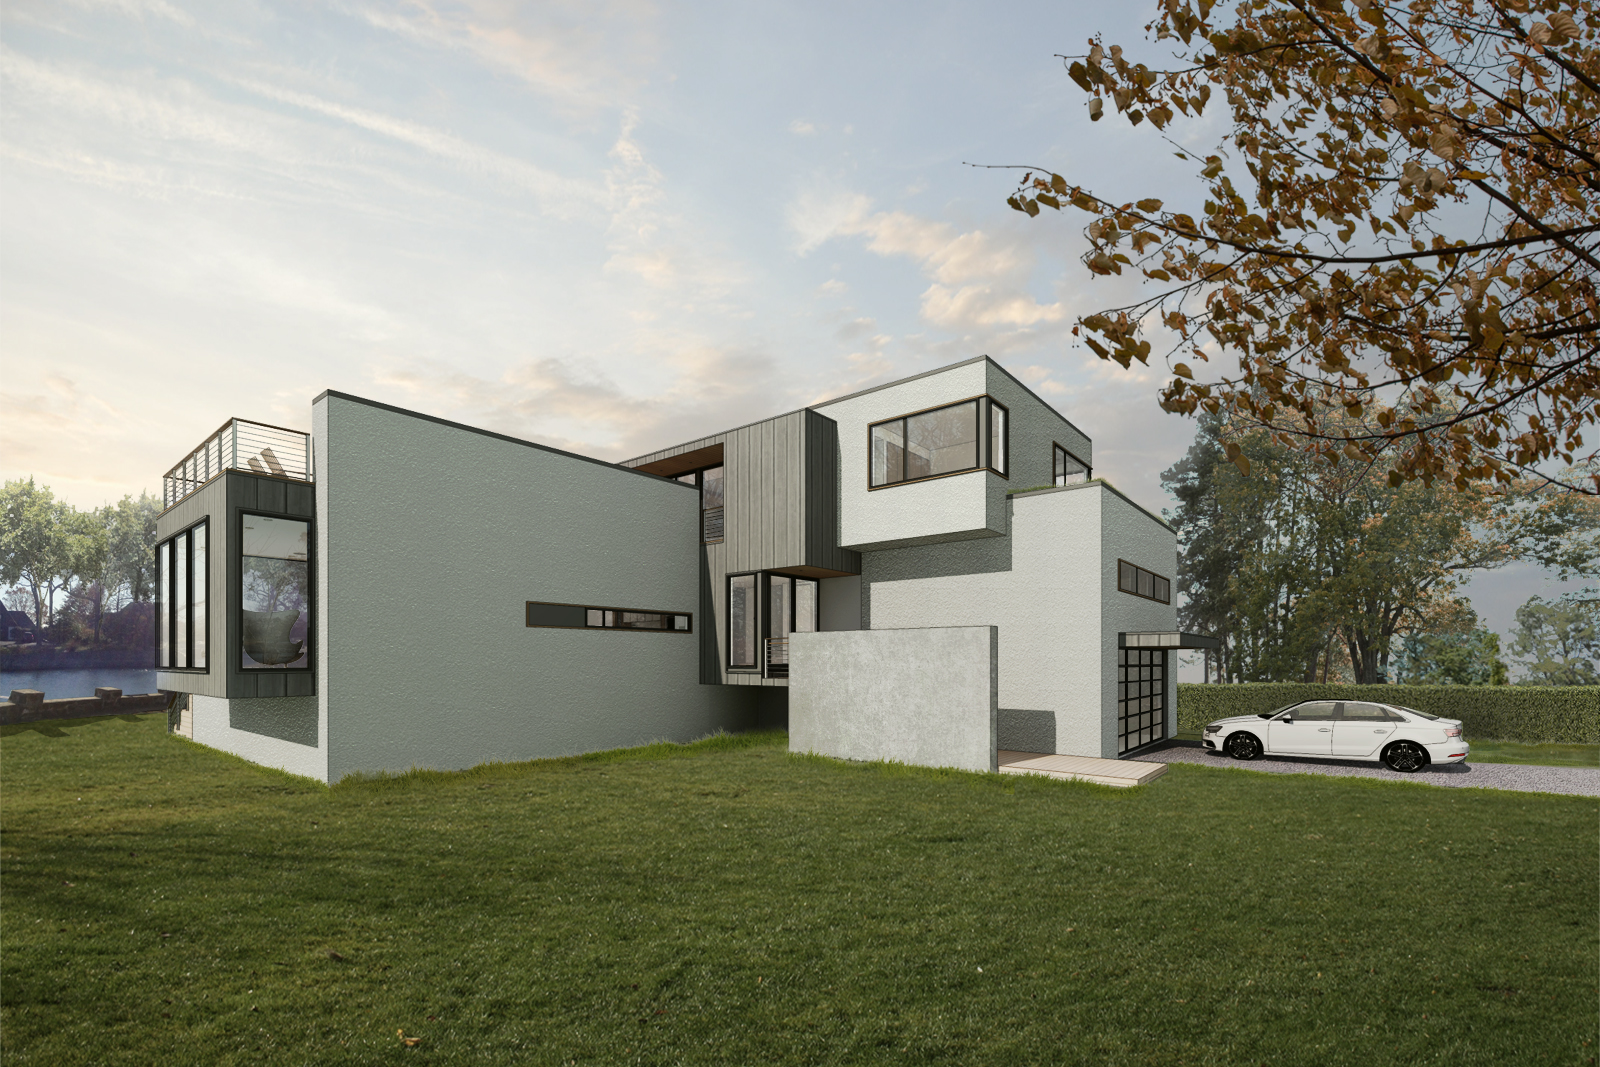 02-res4-resolution-4-architecture-modern-modular-prefab-douglas-lane-house-exterior-perspective-rendering.jpg